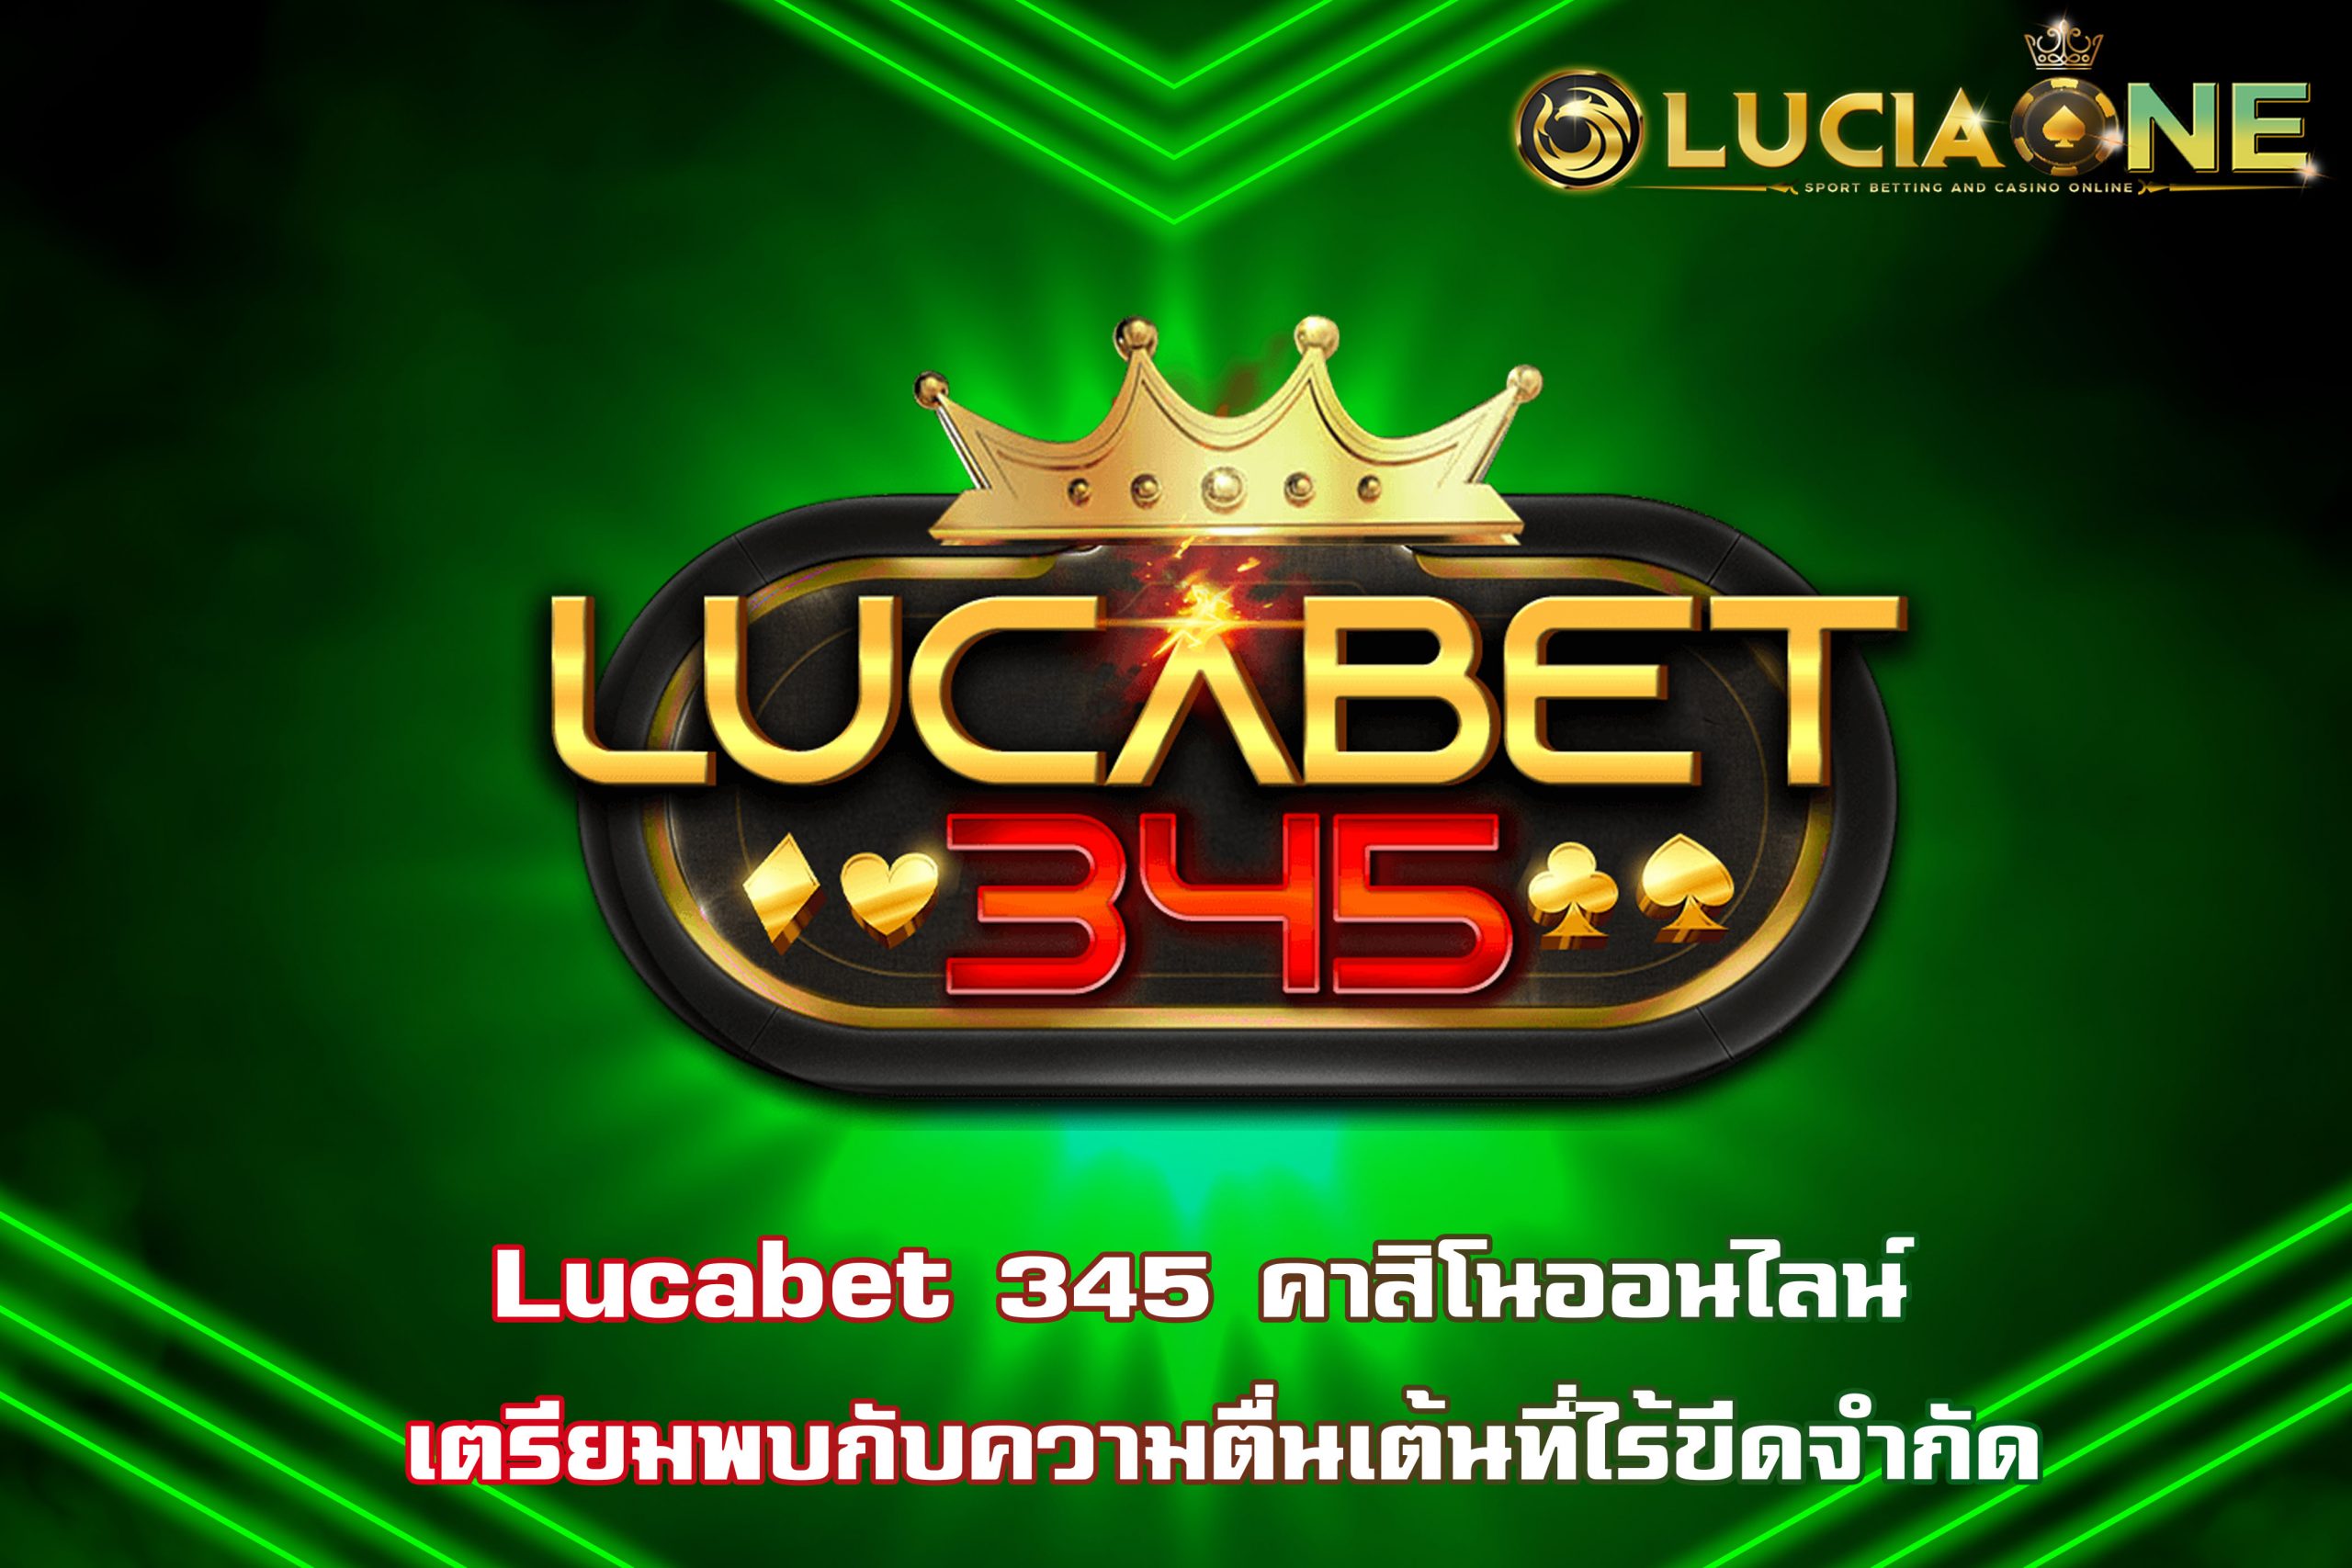 Lucabet 345